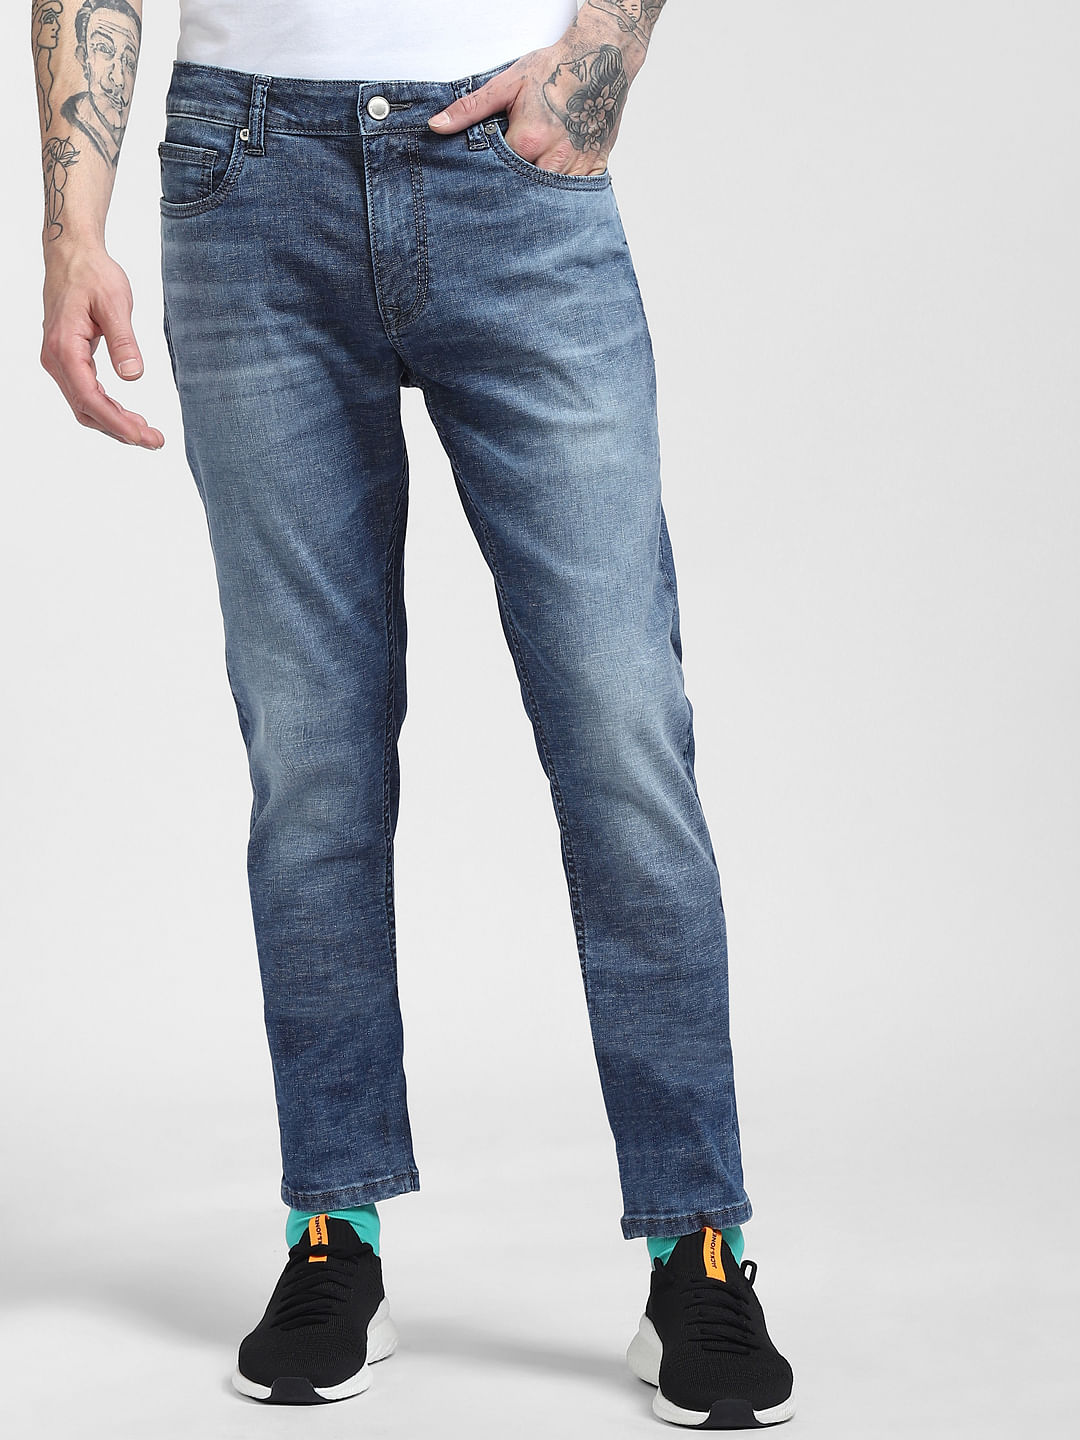 MEN FASHION Jeans Worn-in Blue discount 57% Jack & Jones Jeggings & Skinny & Slim 